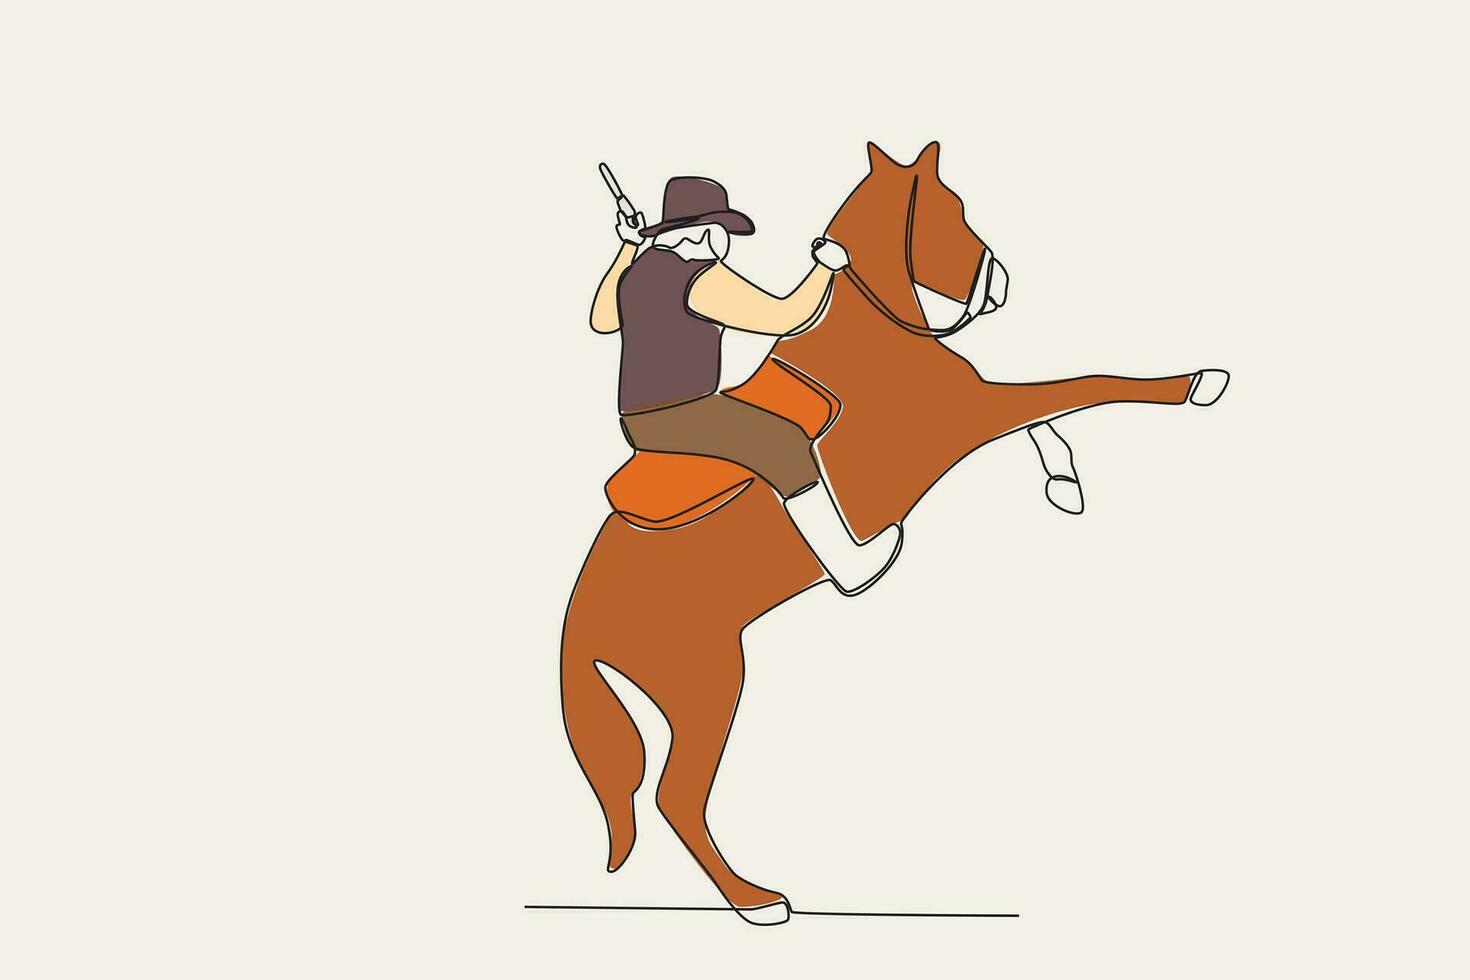 Color illustration of a cowboy riding a horse vector